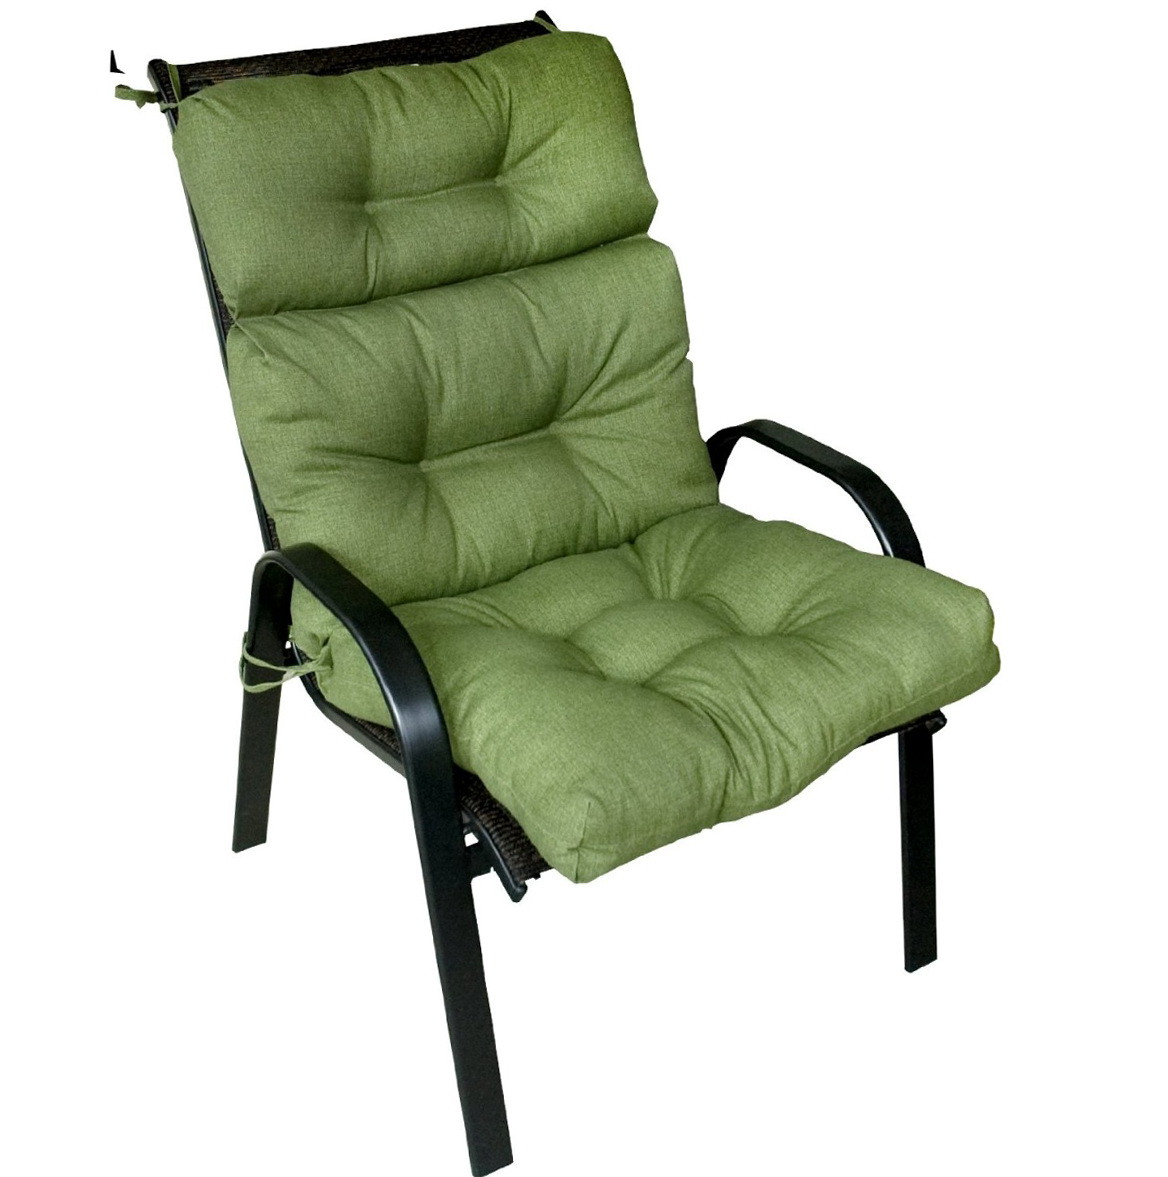 Best ideas about Patio Cushions Cheap
. Save or Pin Patio Chair Cushions Cheap Now.